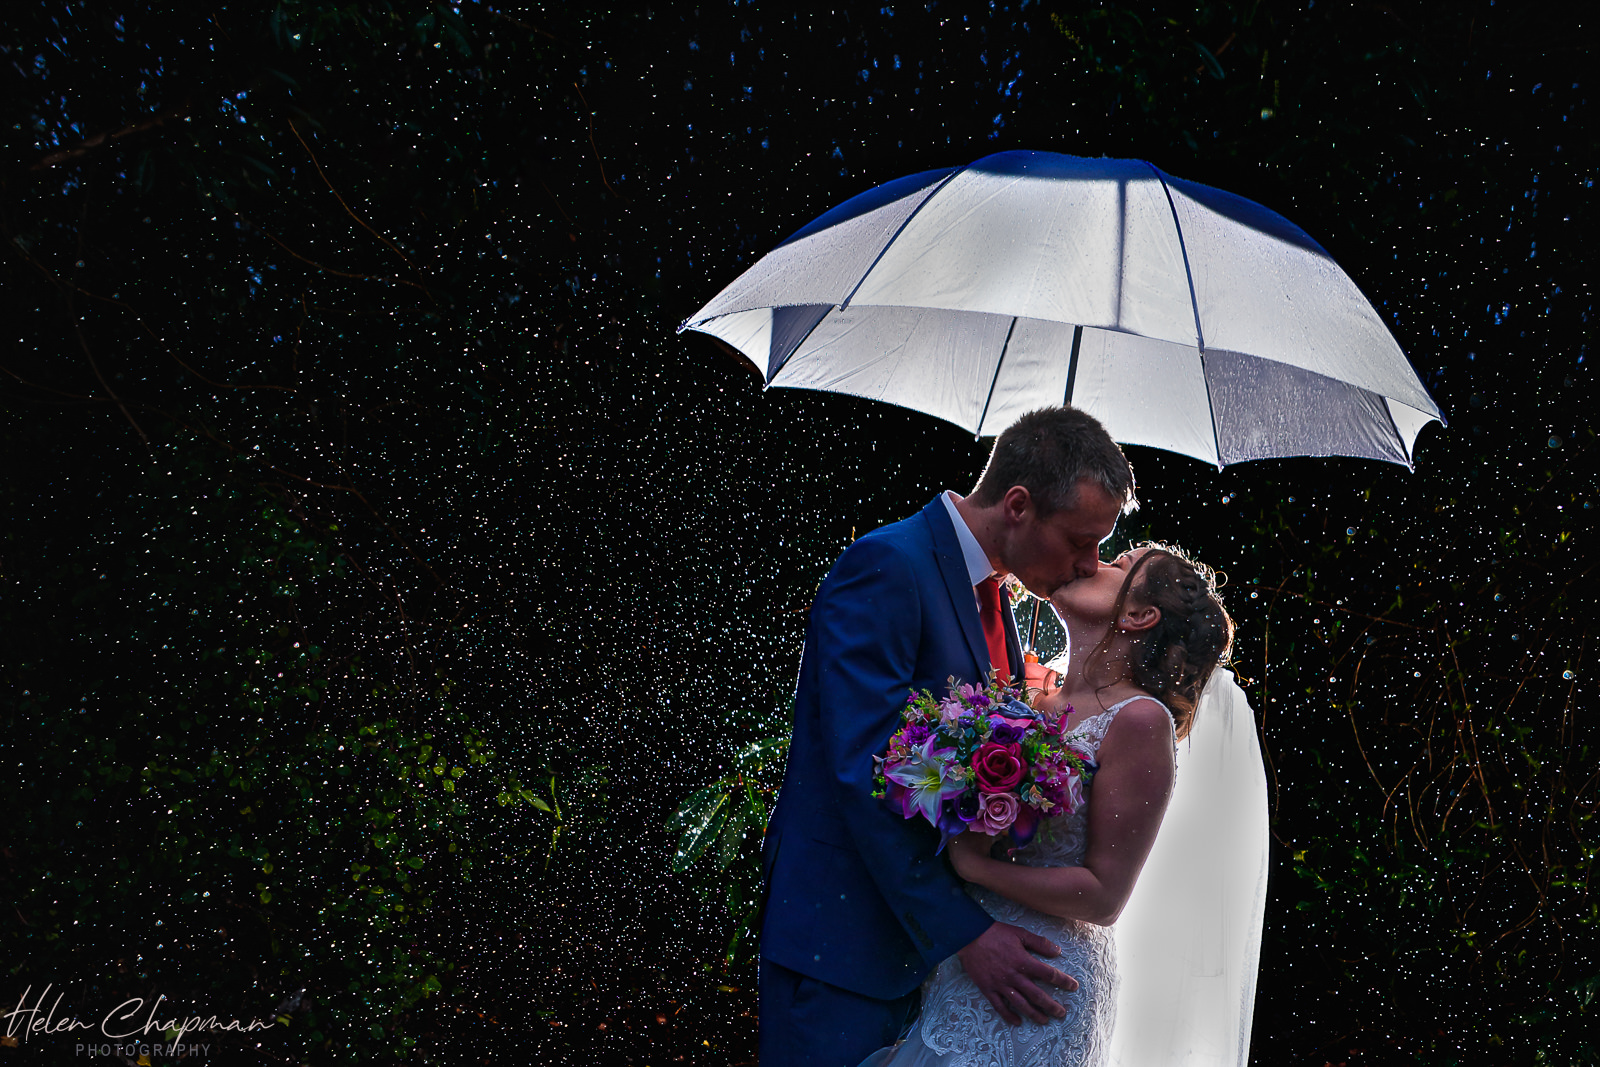 Couple kissing under umbrella at night rain.